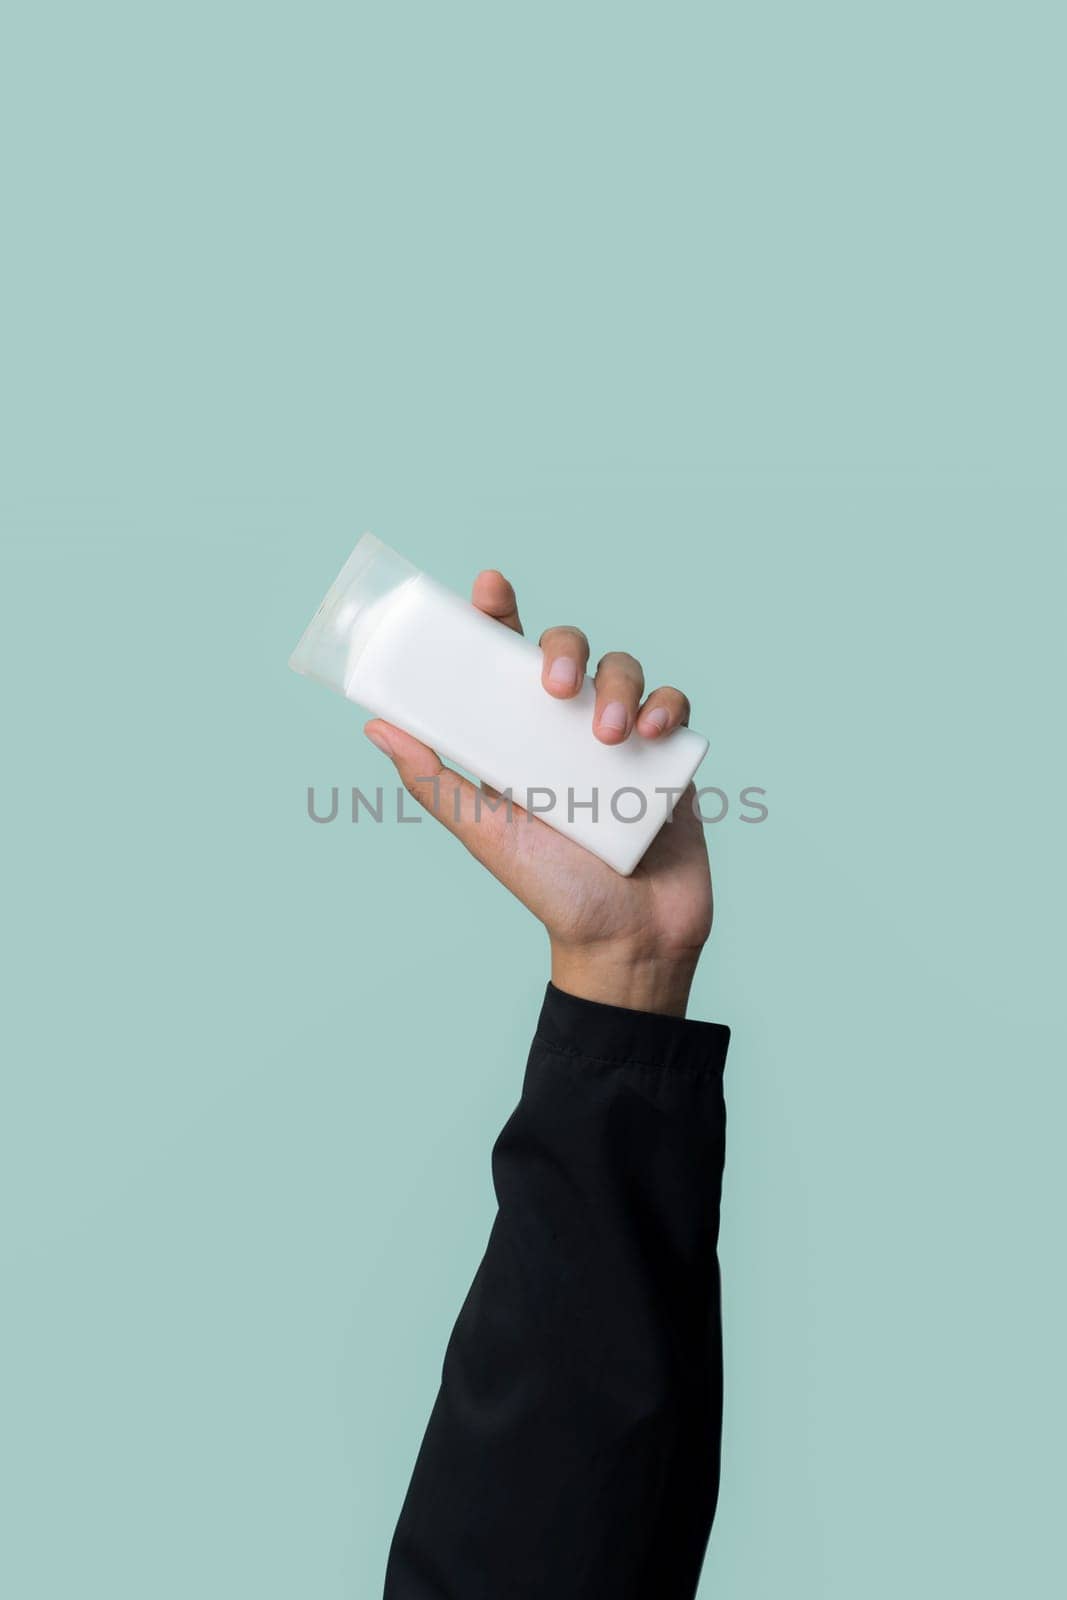 Businessman's hand holding plastic bottle on isolated background. Quaint by biancoblue